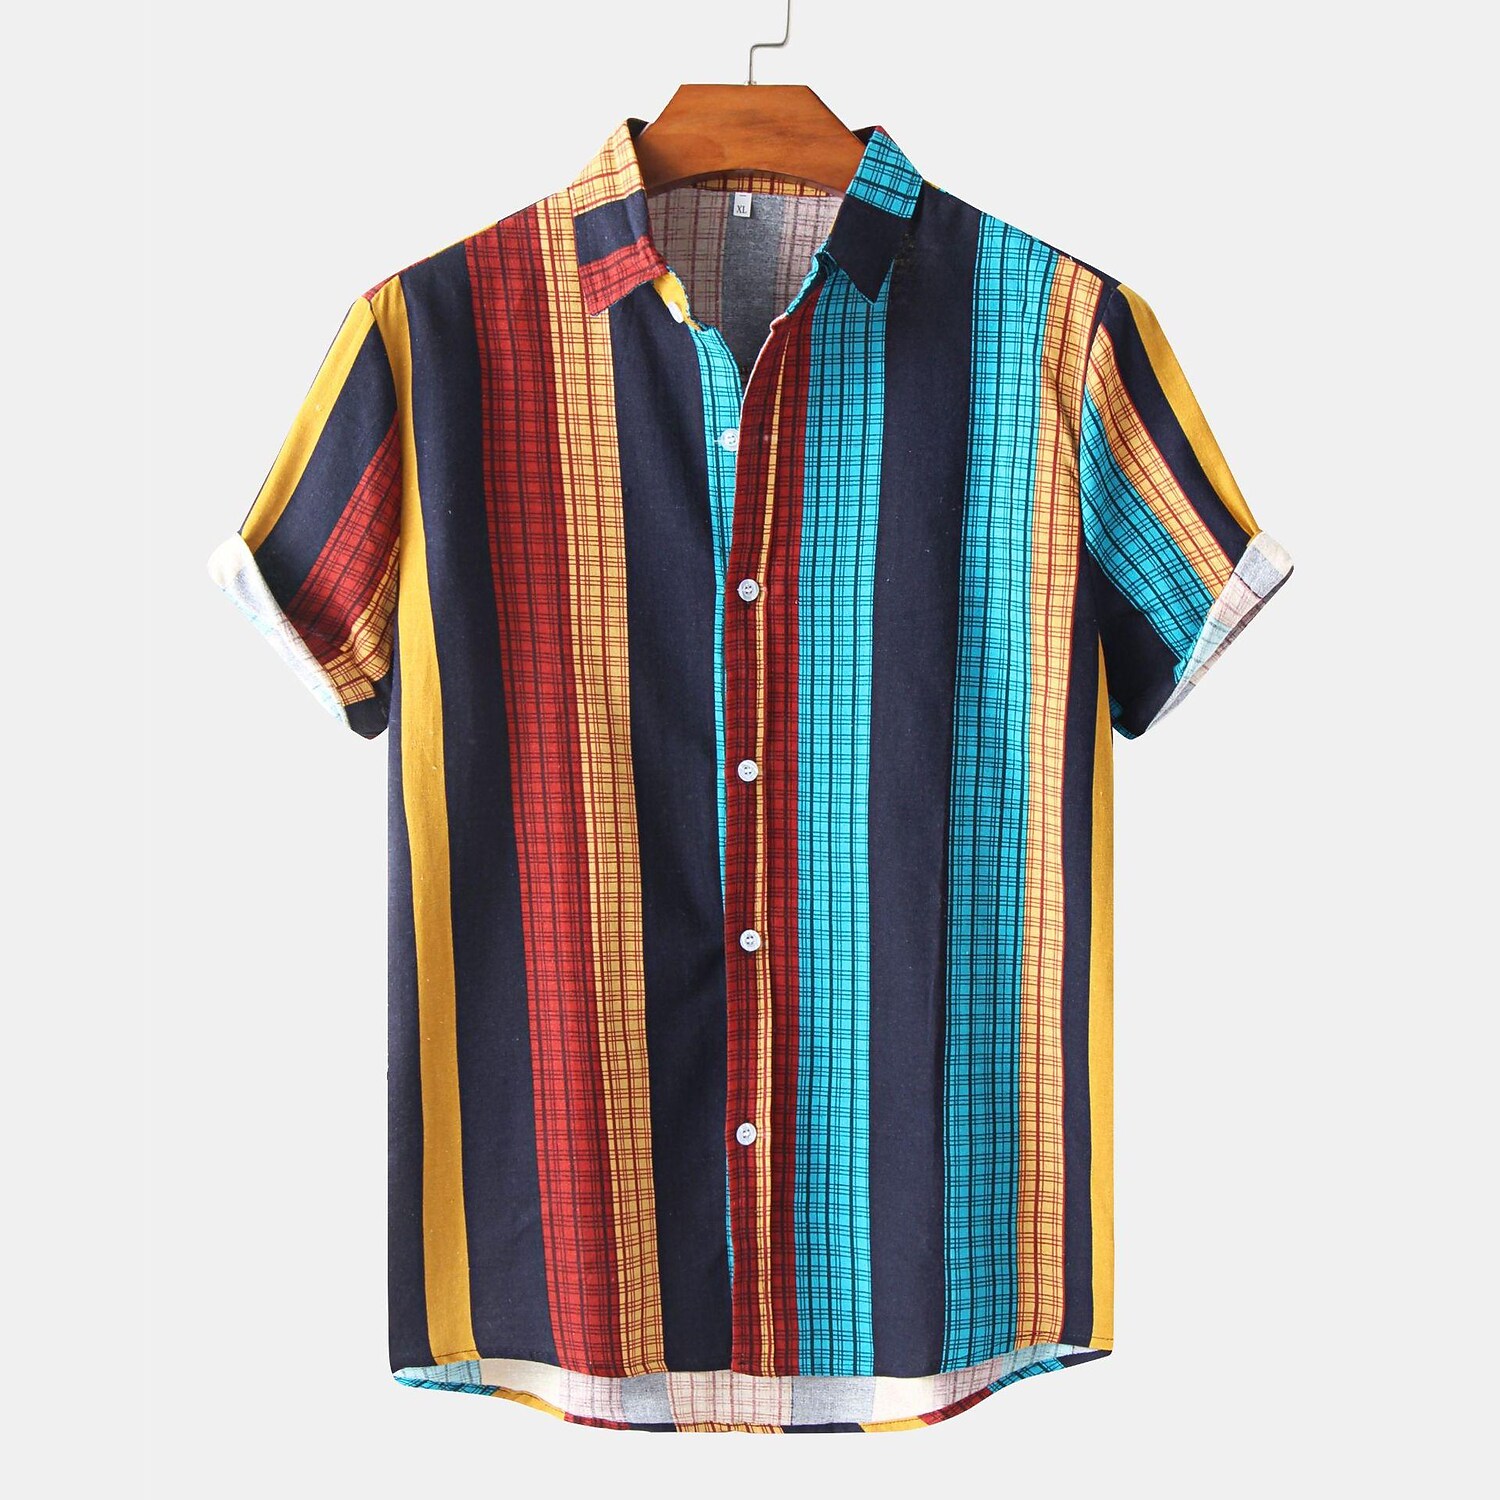 Men's Colorful Striped Resort Short Sleeve Shirt